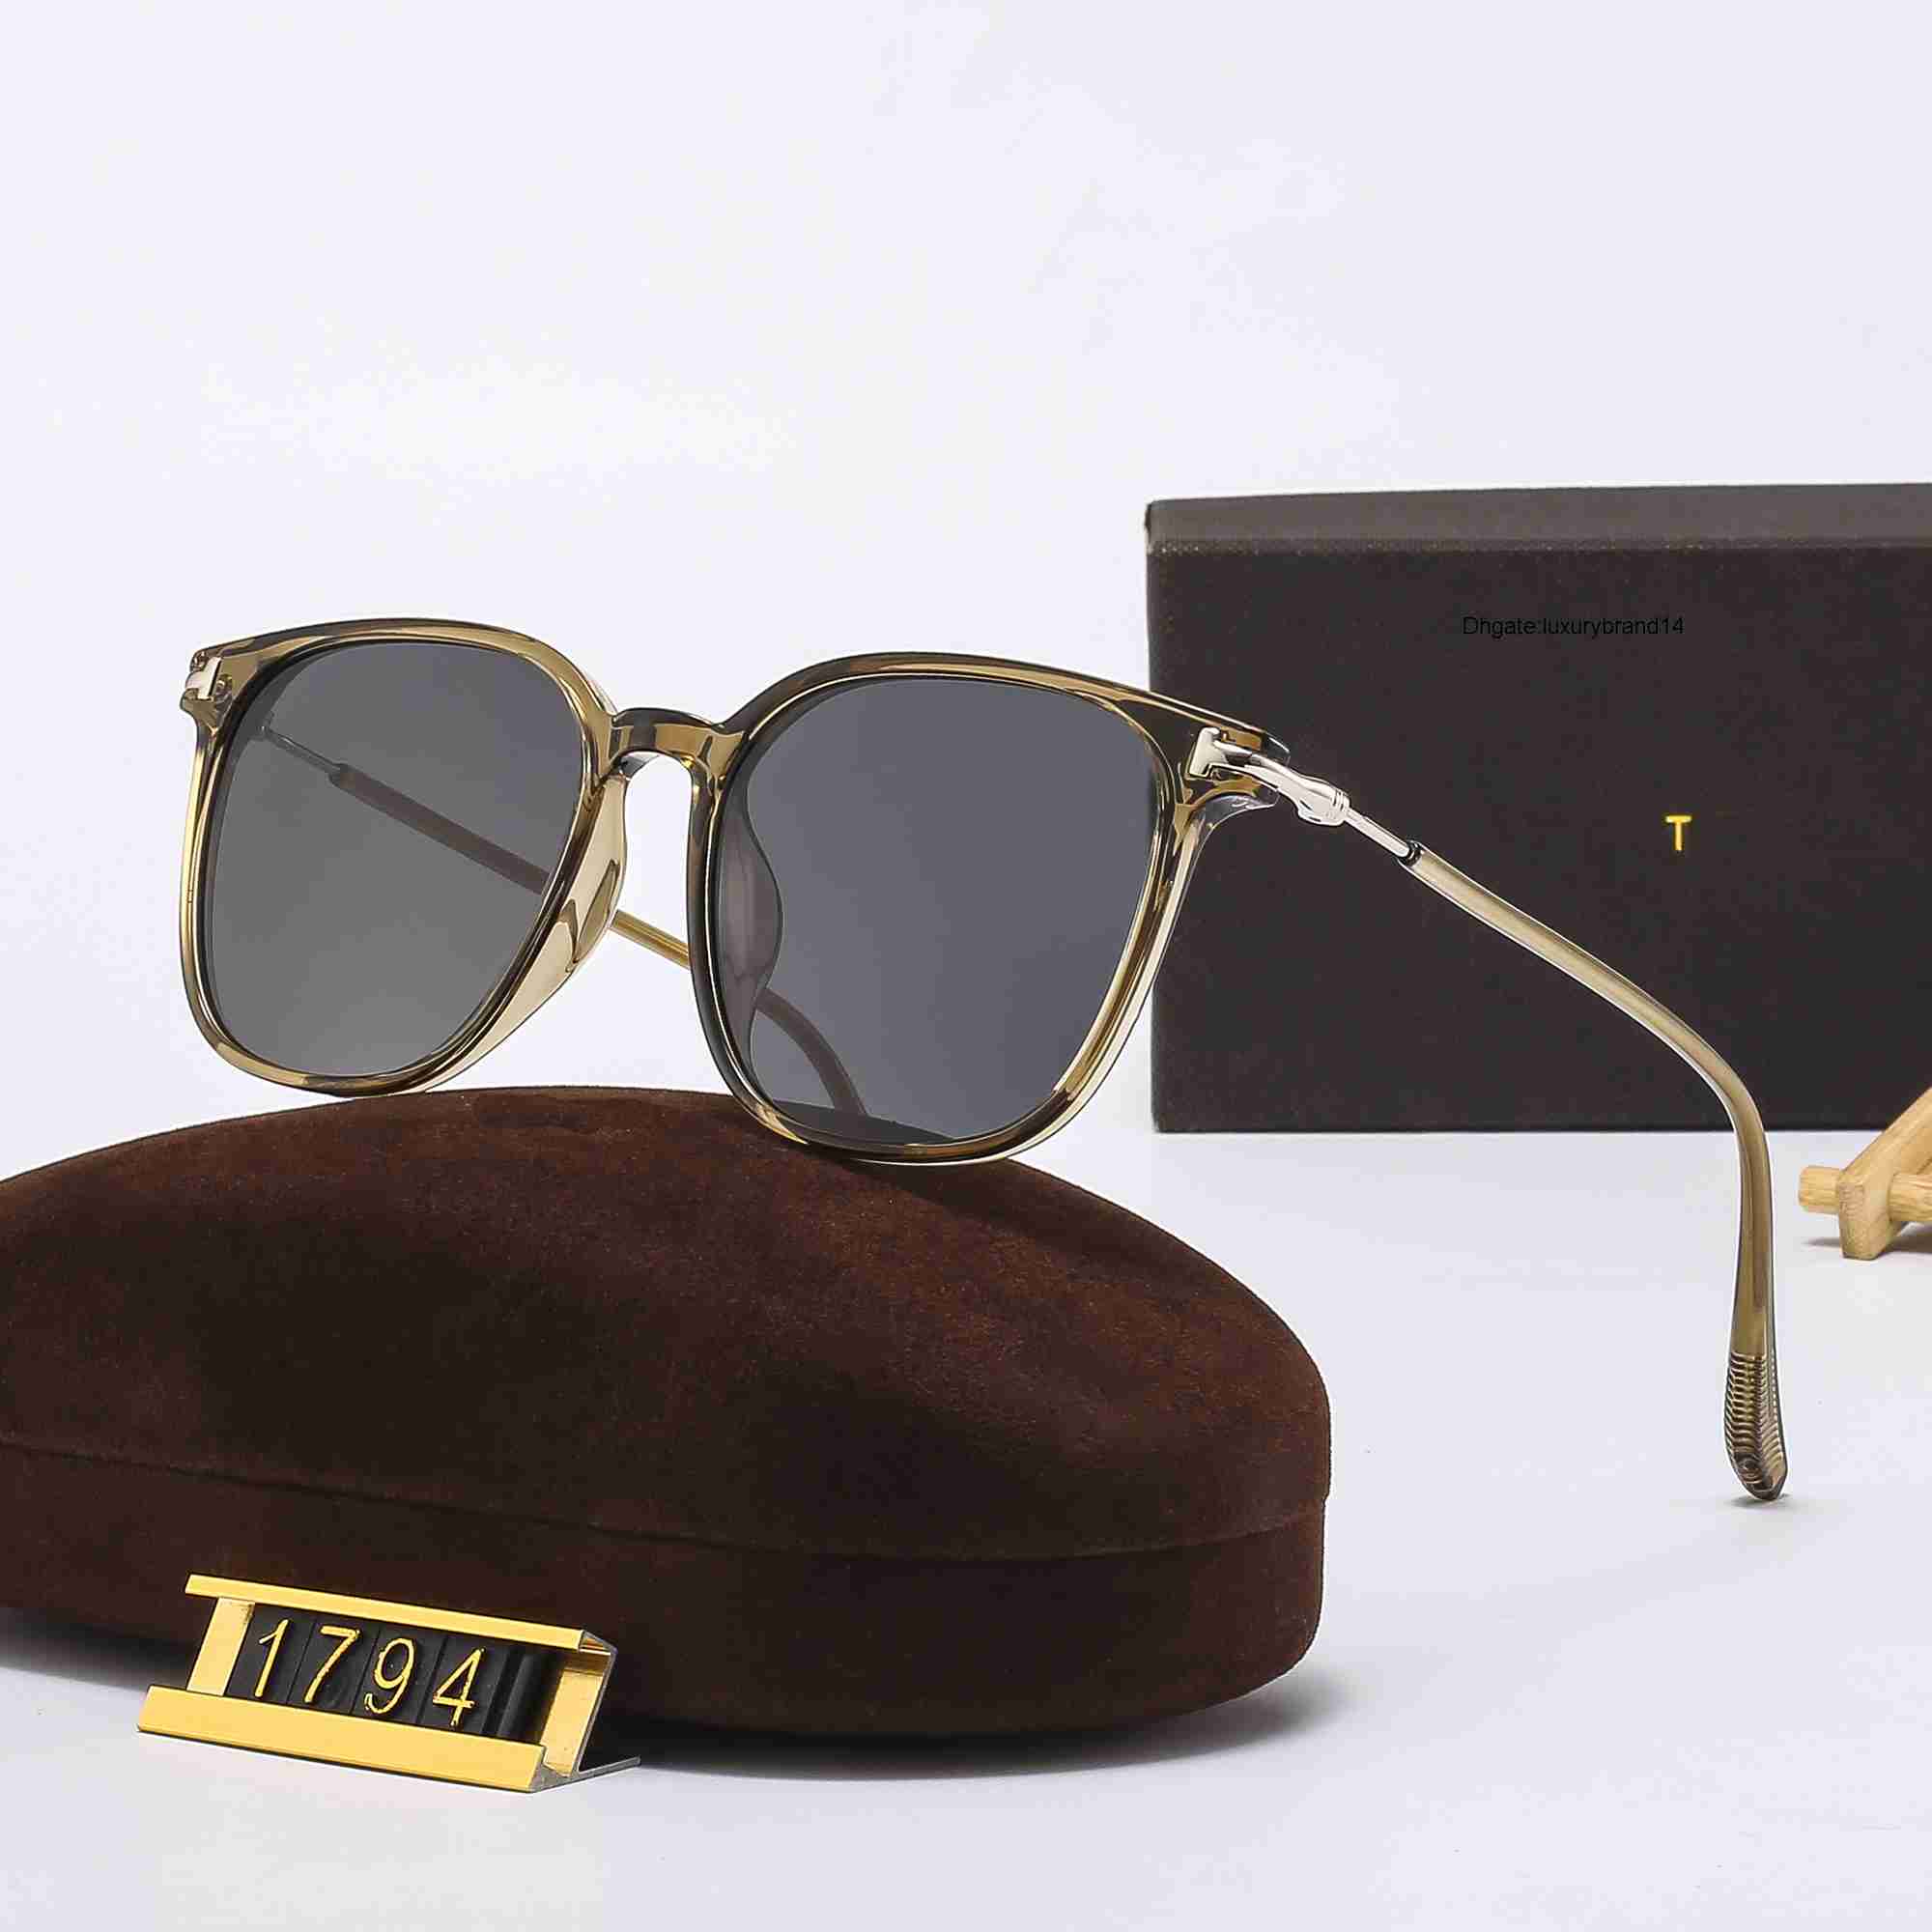 travel metal frame sunglasses for men and women's tempered glass lenses tom-fords photography sunglasses 1794 Square